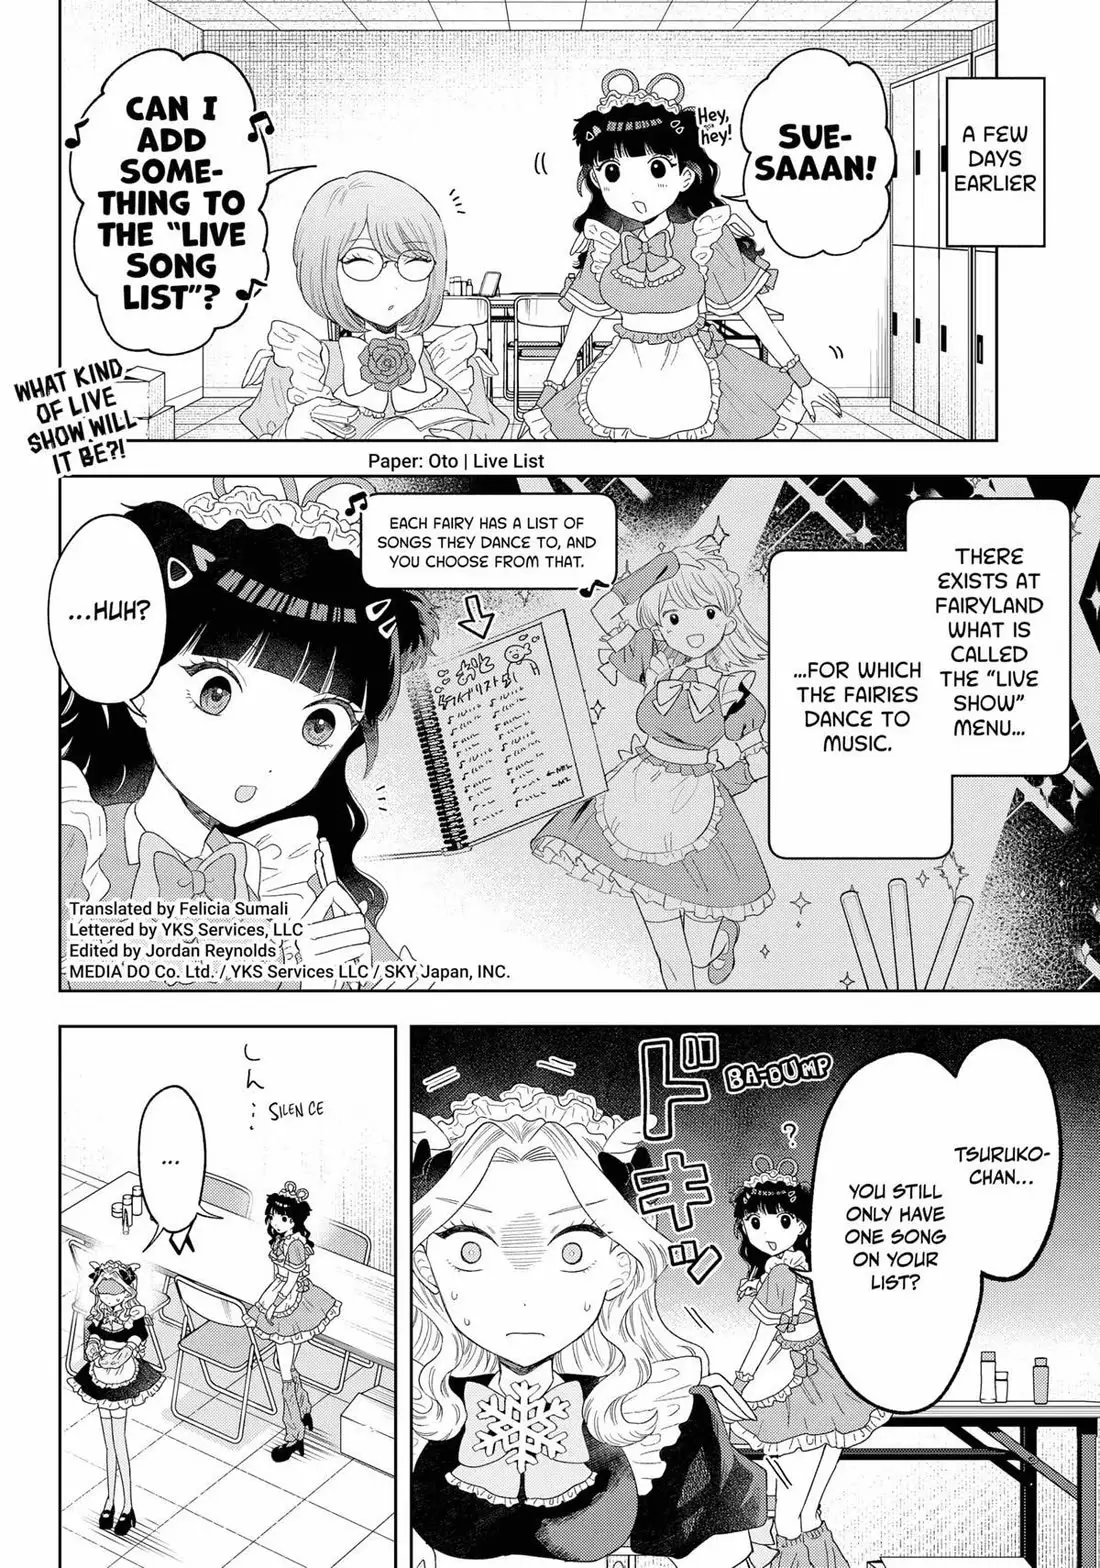 Tsuruko Returns The Favor - 18 page 4-92d0c134